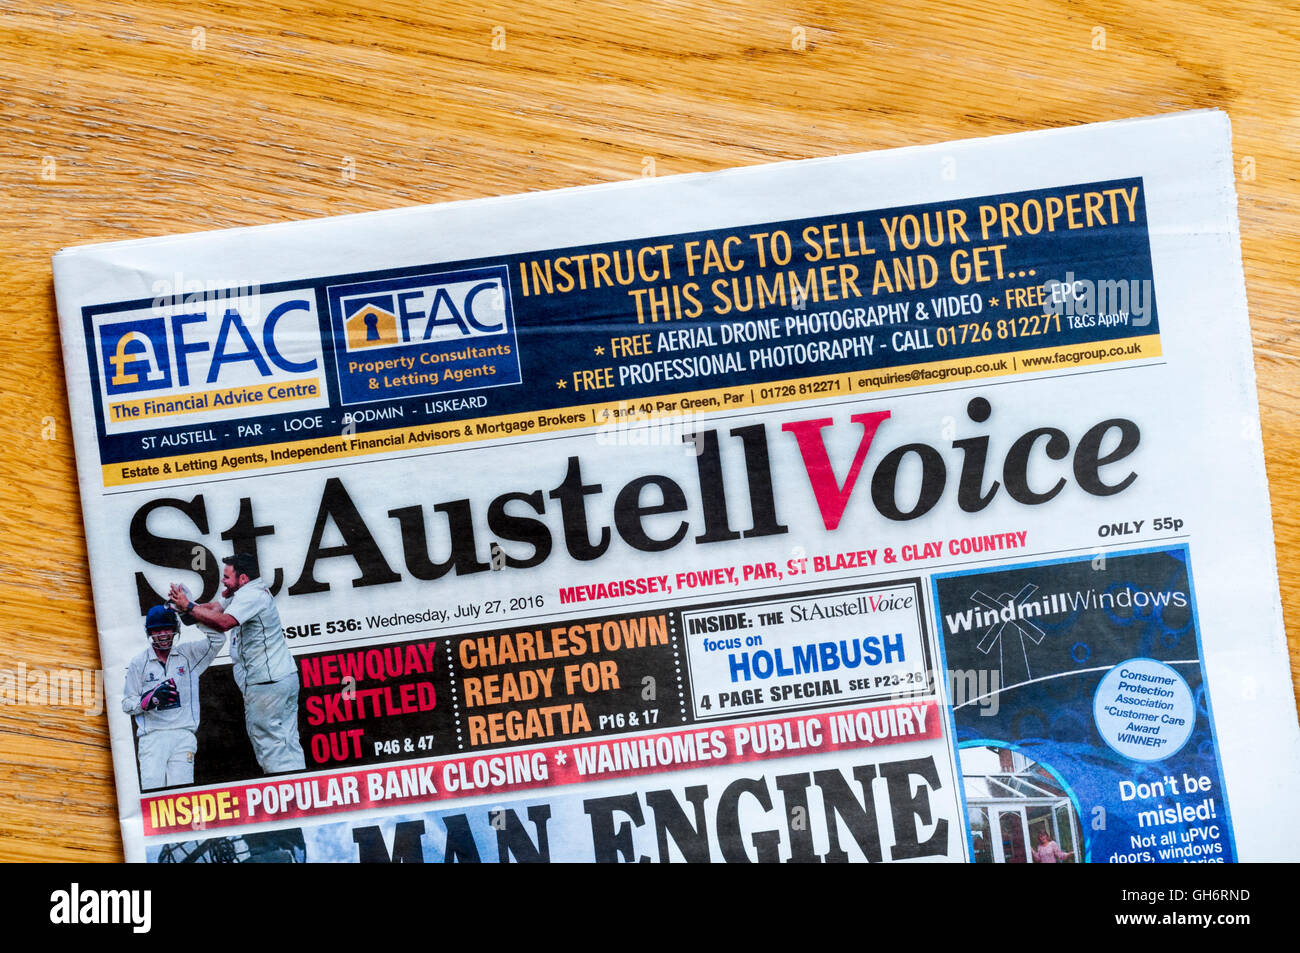 St Austell Voice, a local Cornish newspaper. Stock Photo